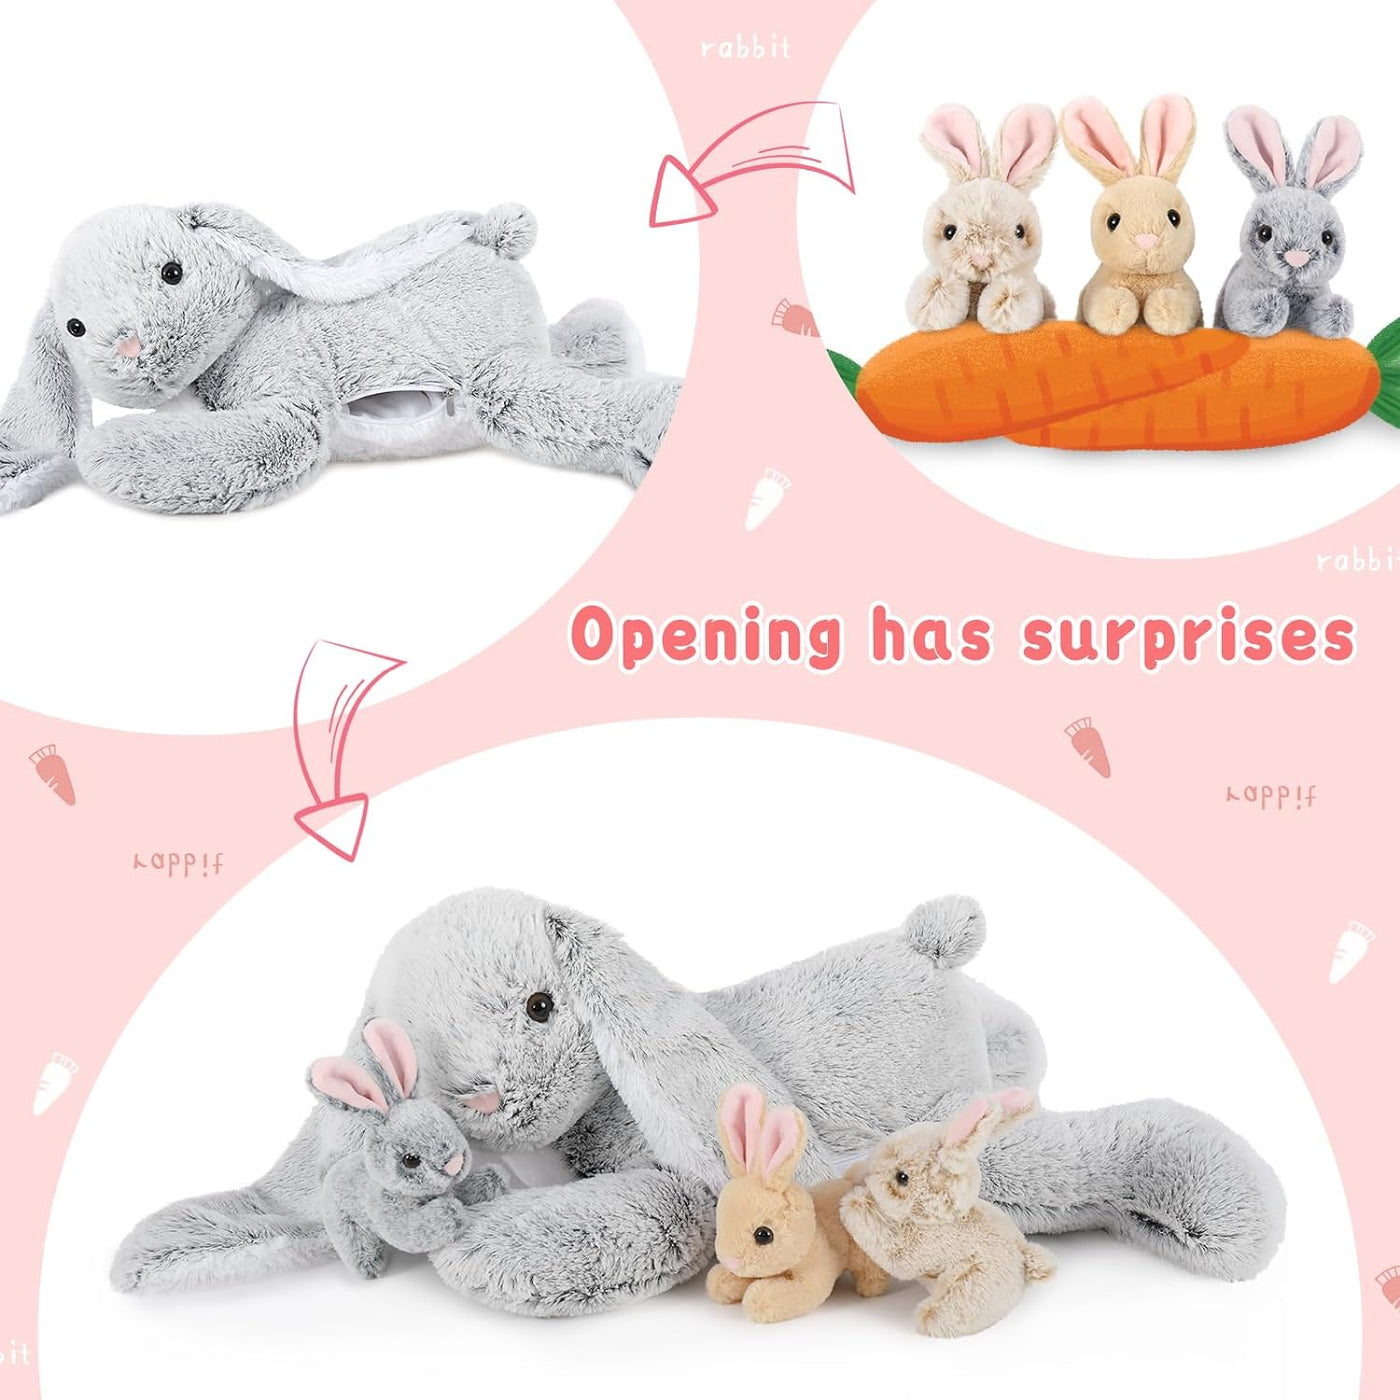 Bunny Stuffed Animal Toy Set, Grey, 24 Inches - MorisMos Stuffed Animals